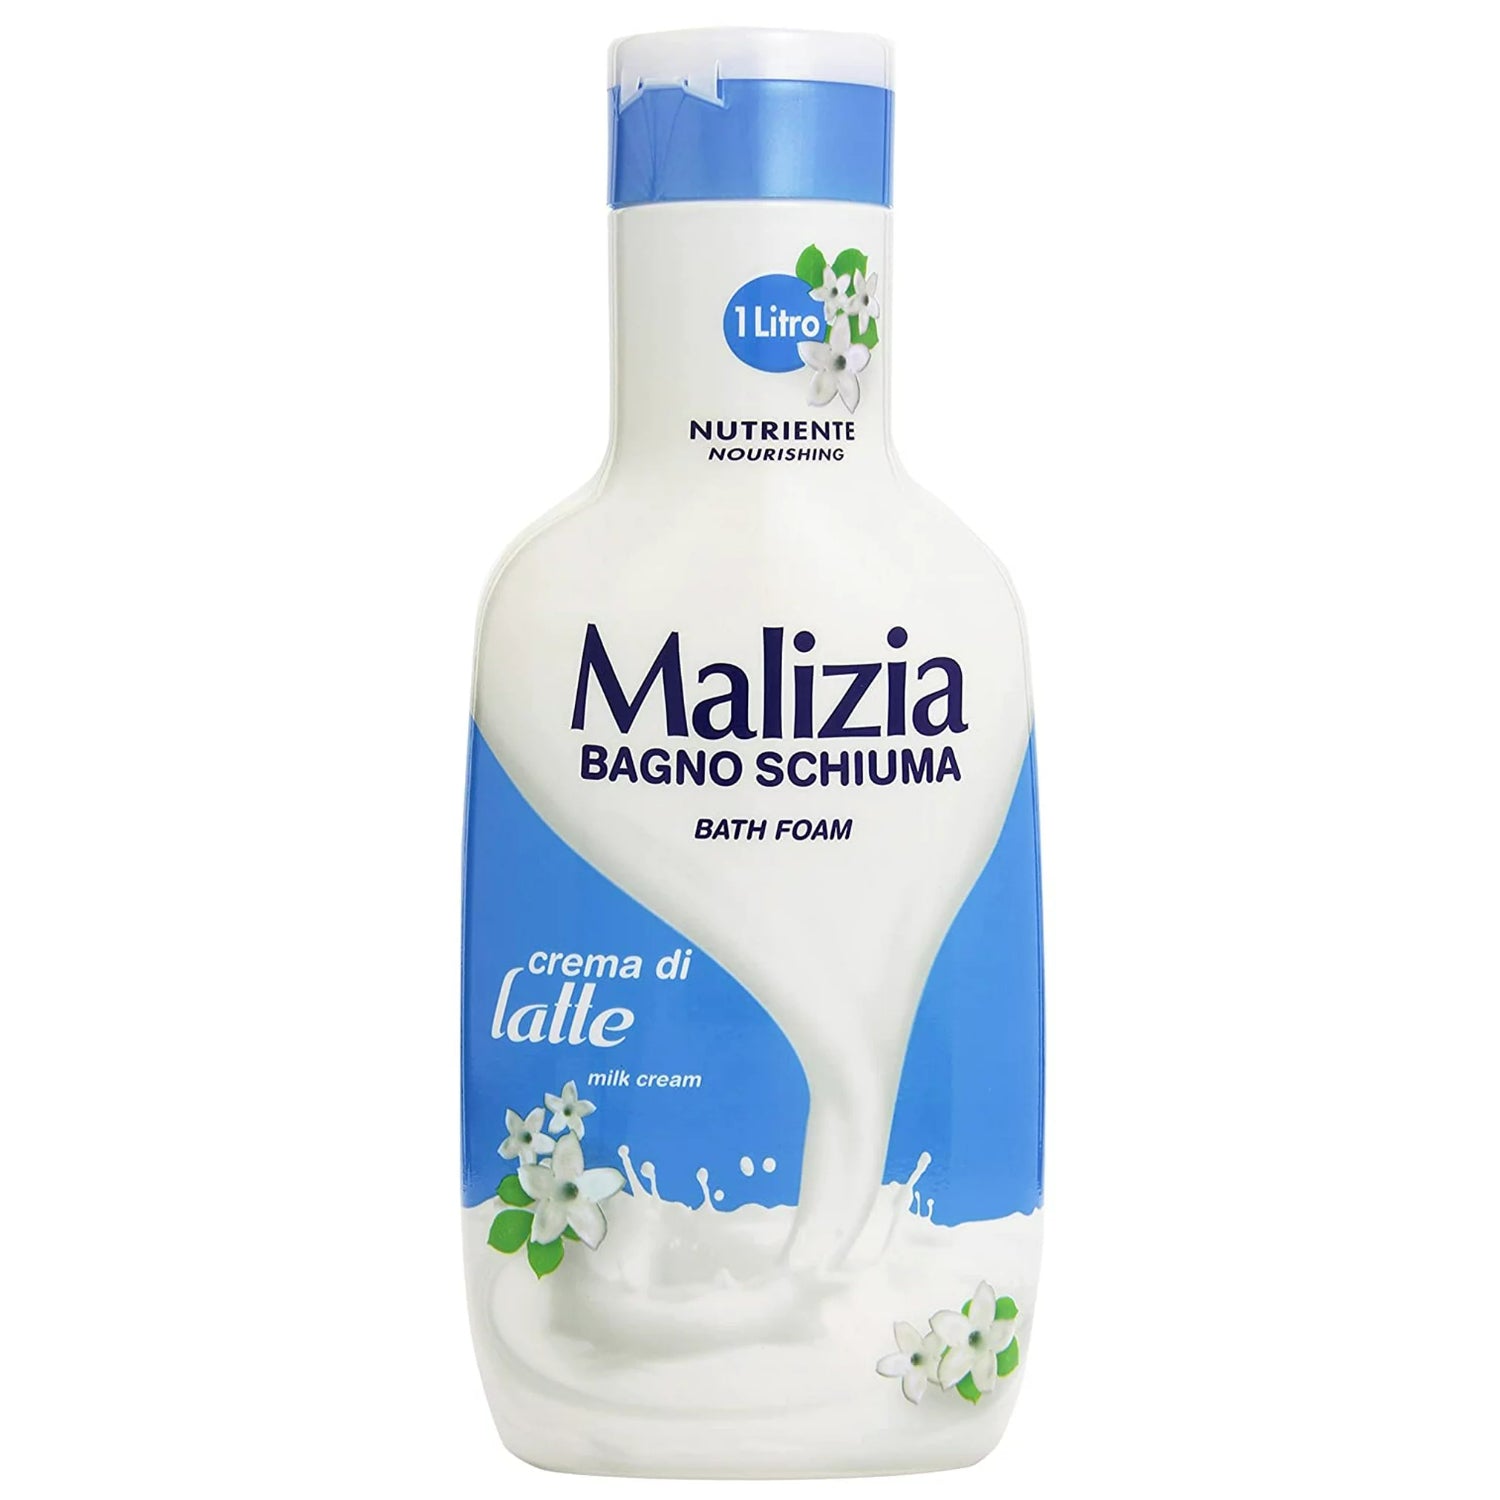 Malizia Shower Gel with Milk Cream 1L for Nourished Skin